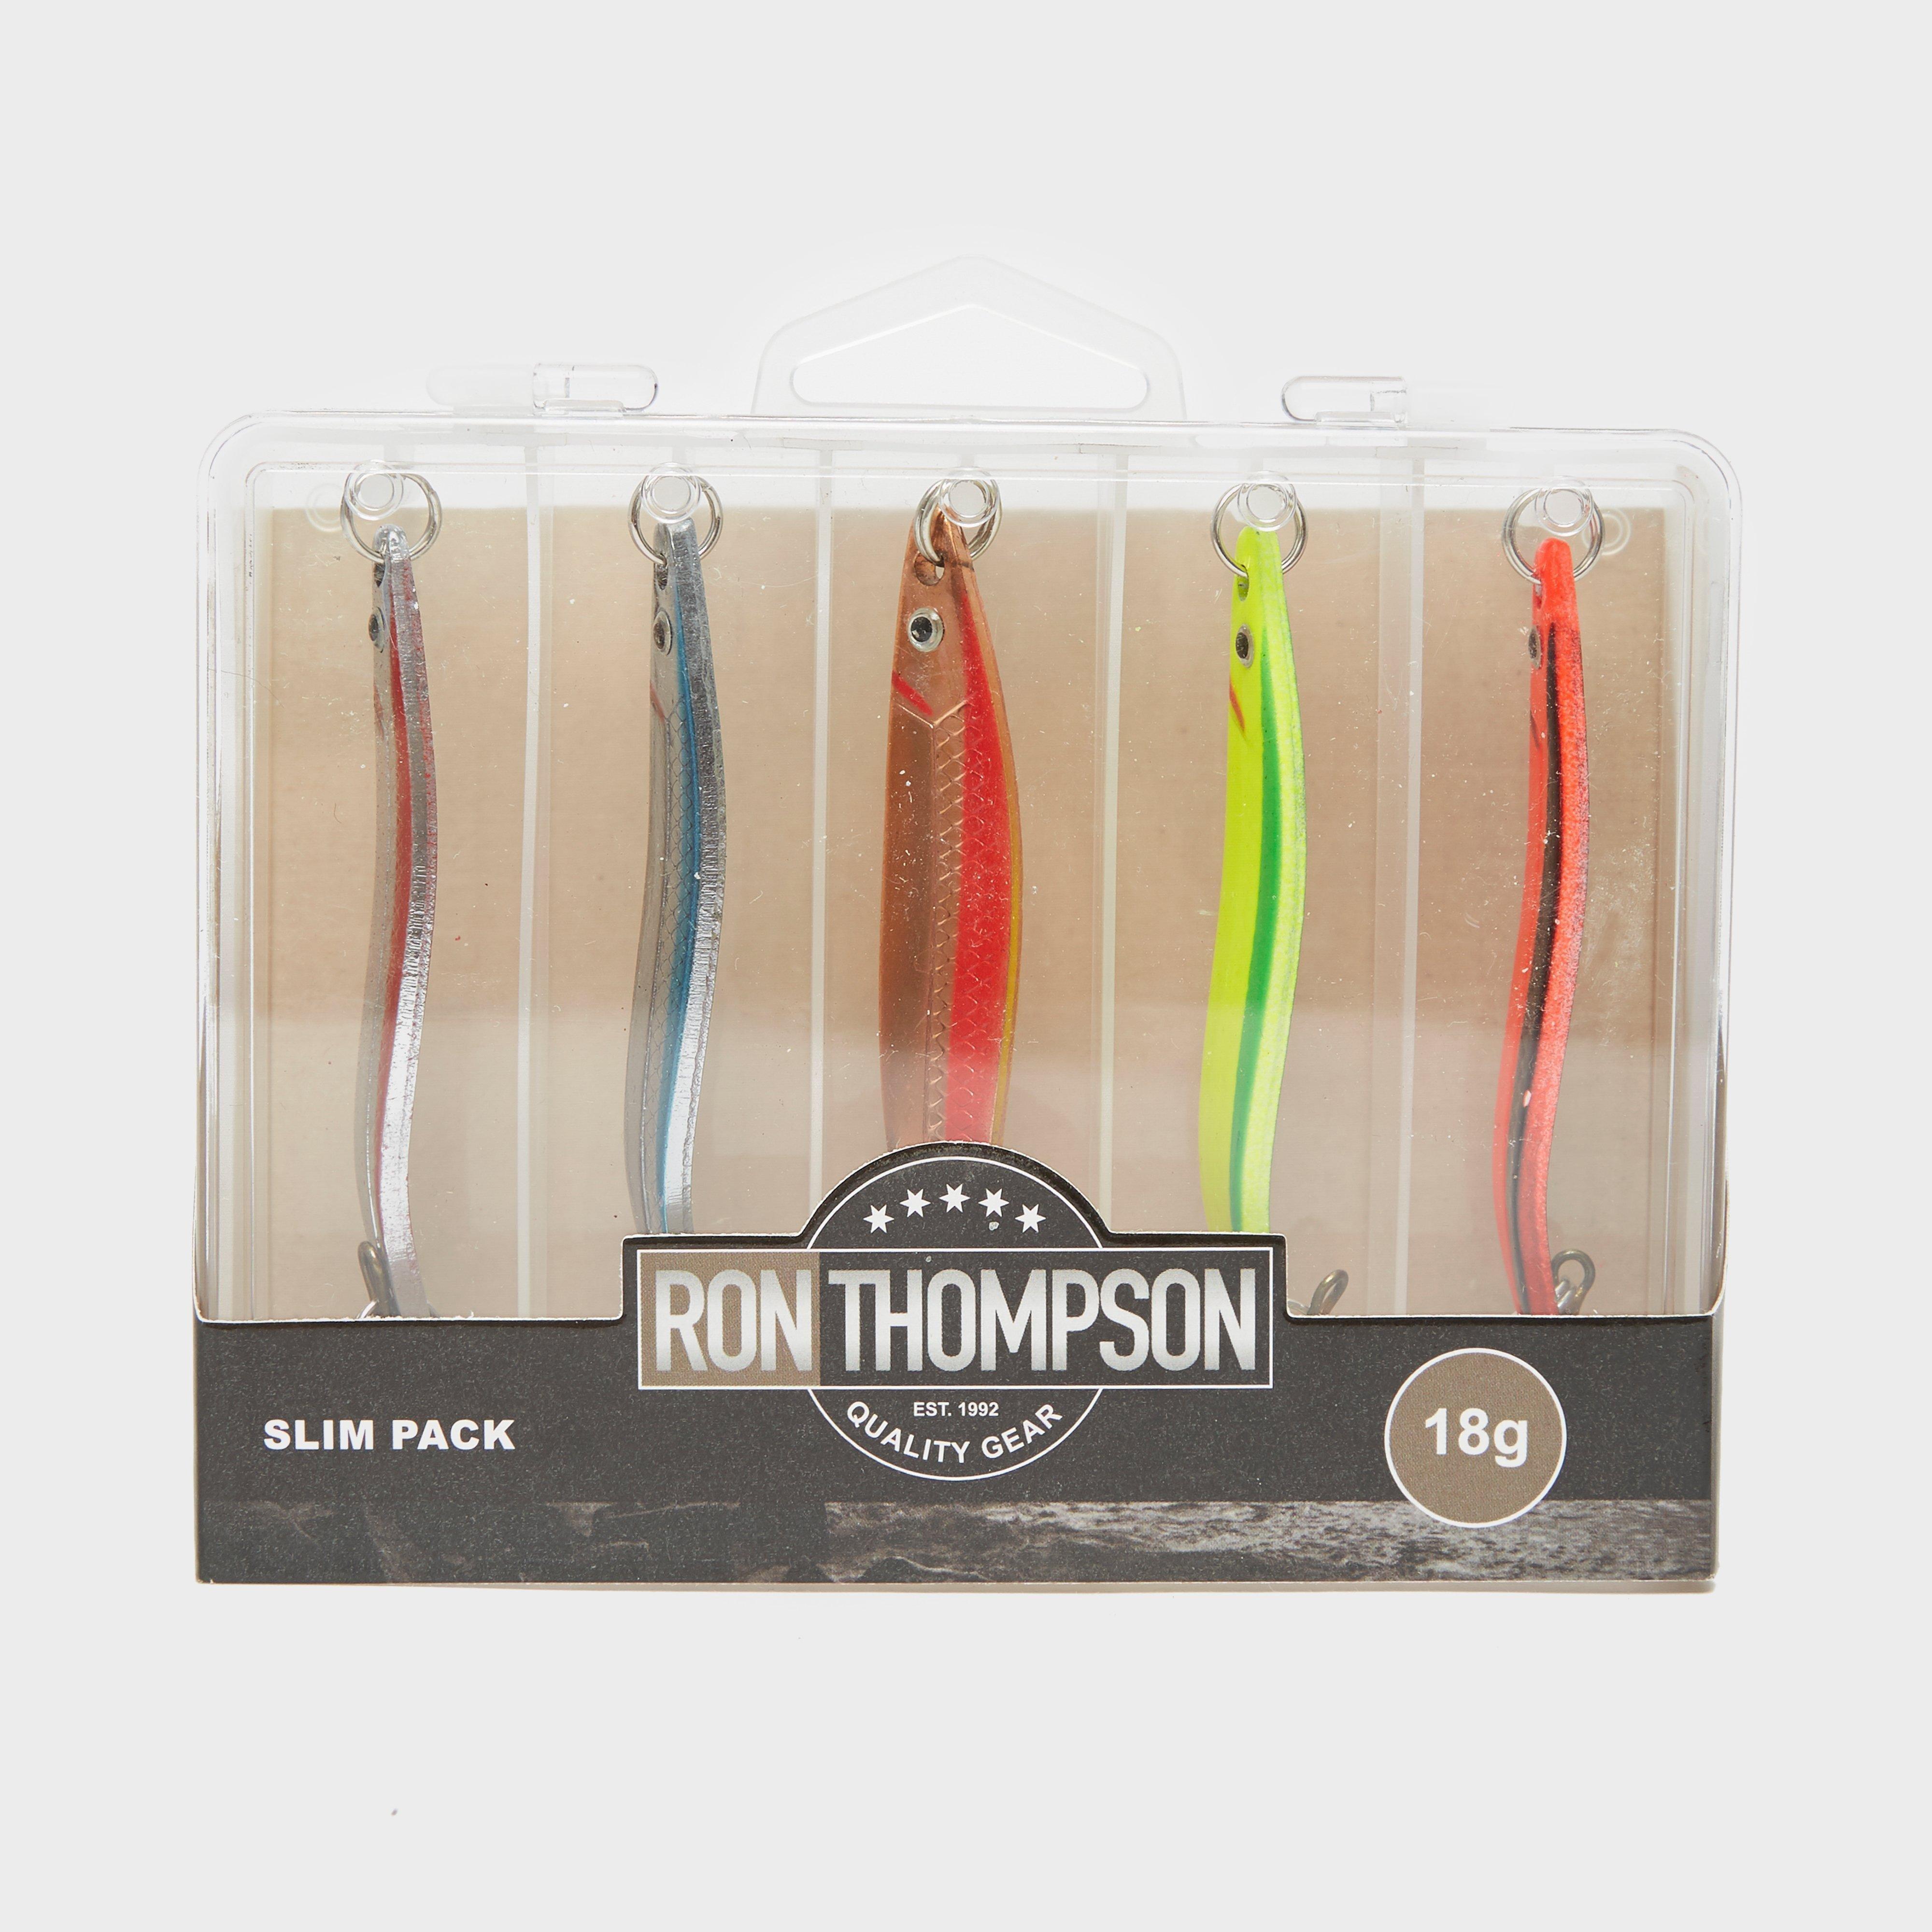 Ron Thompson Slim Lures 18g - 5 Pack - 5pc/5pc  5pc/5pc